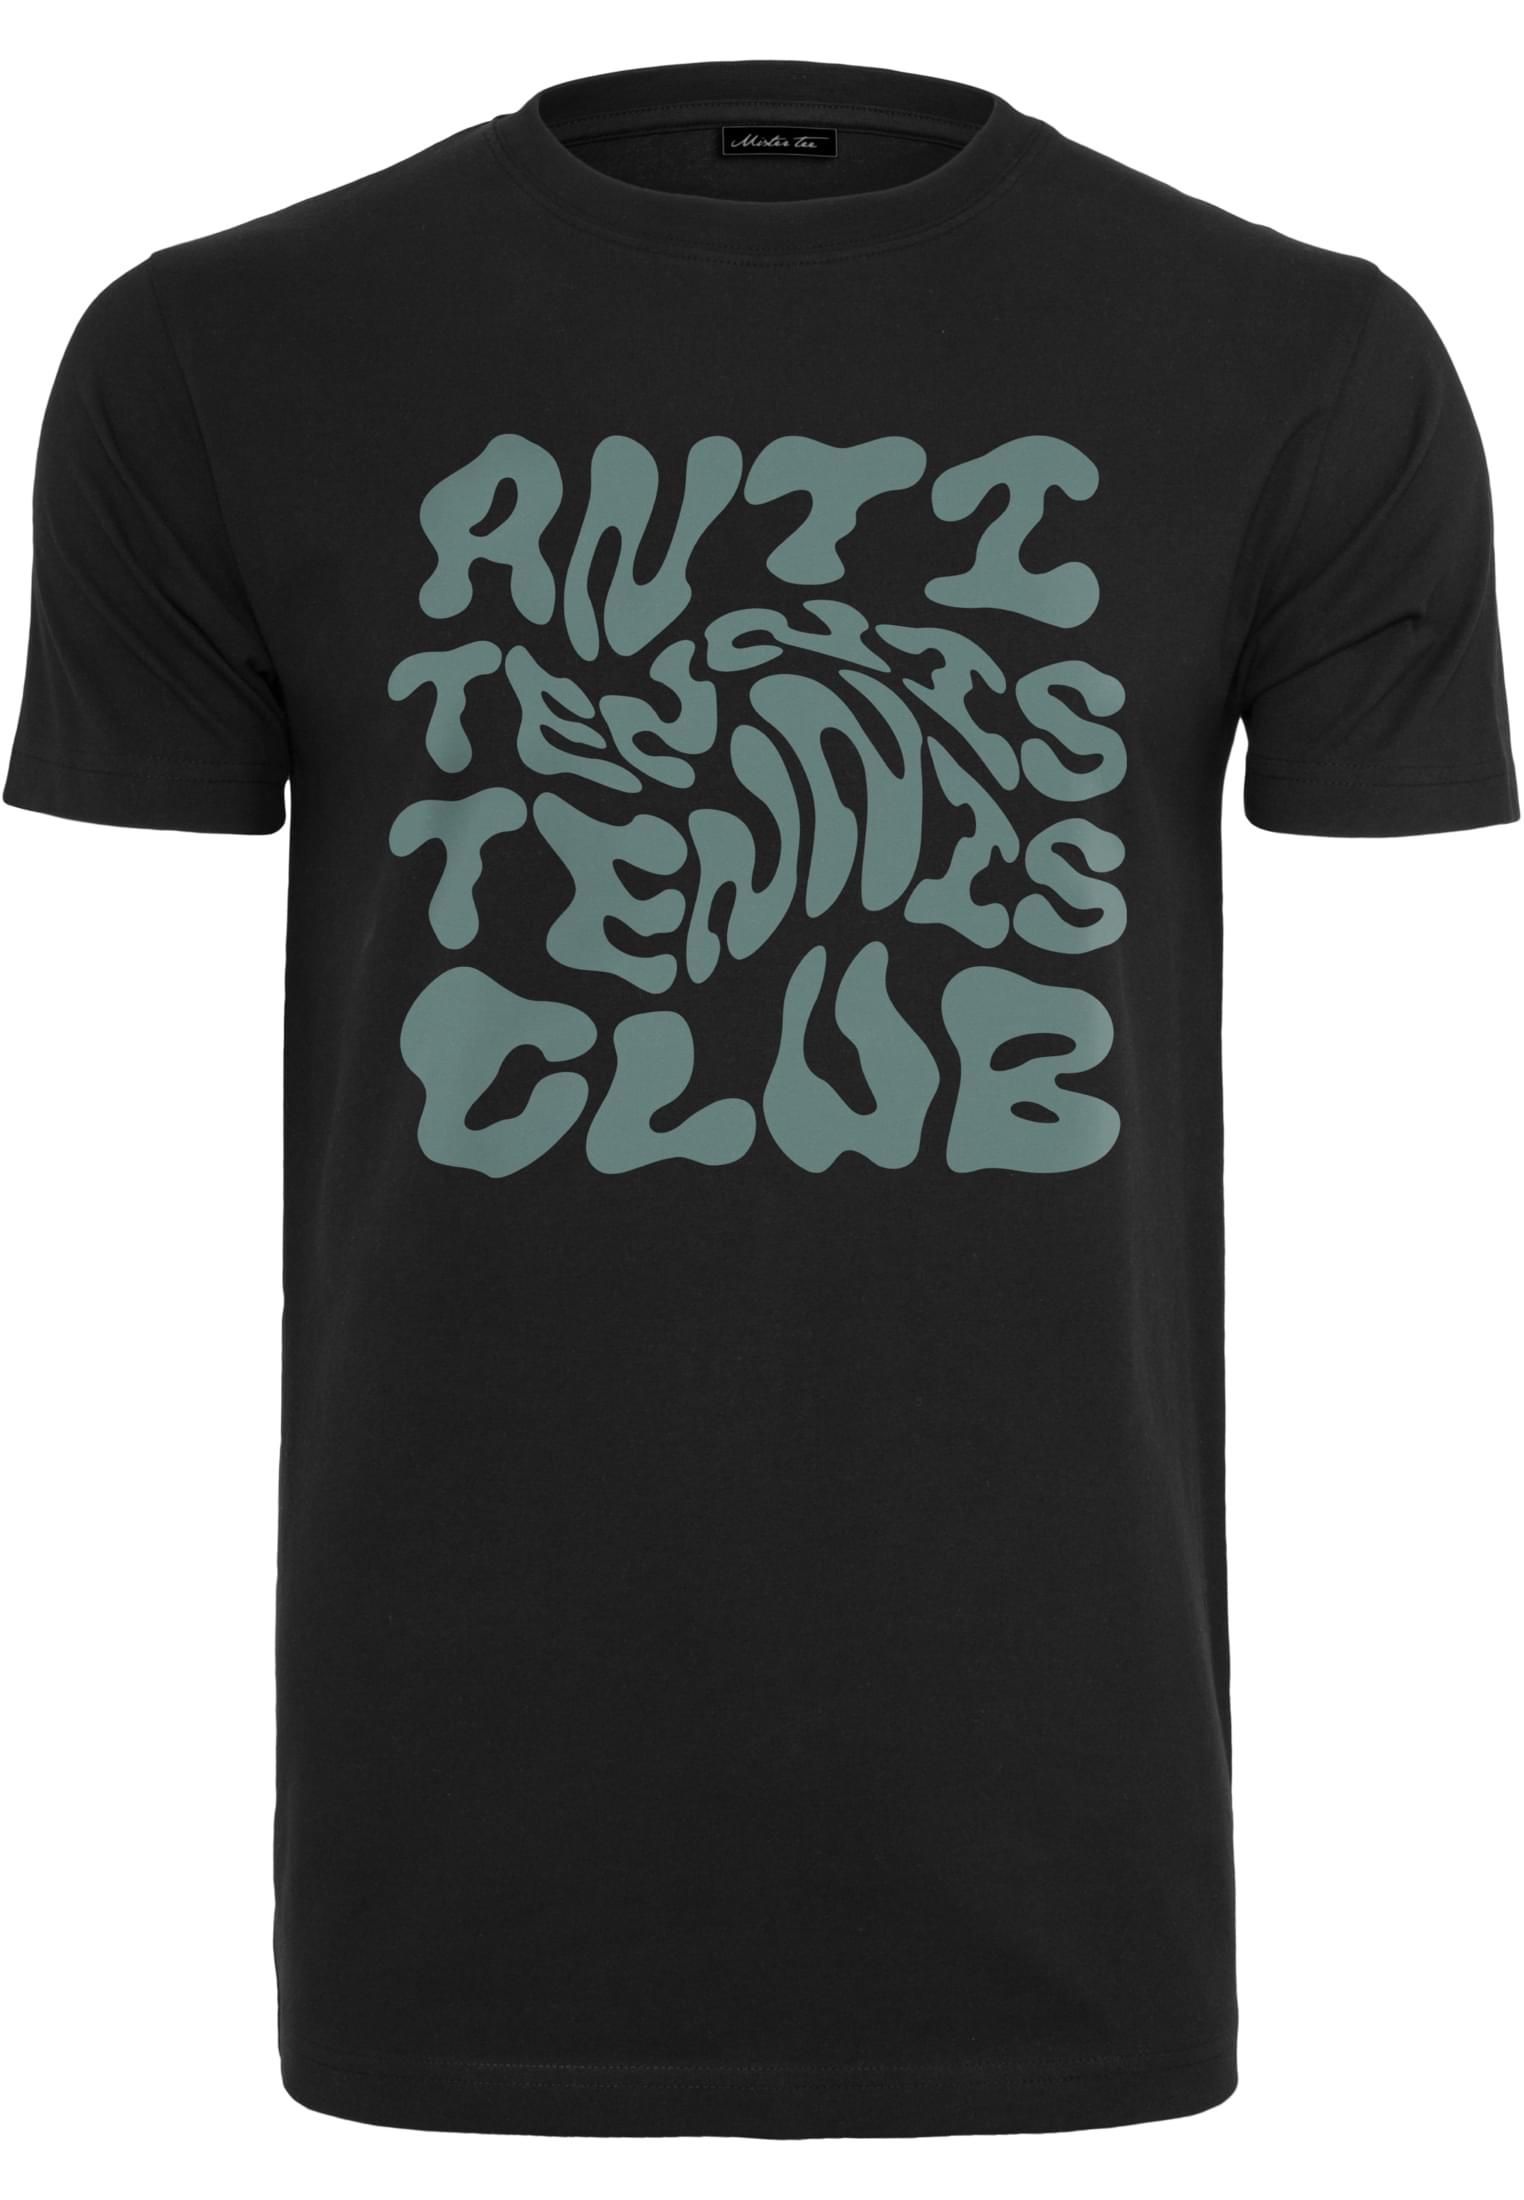 Anti Tennis Club T-Shirt Black